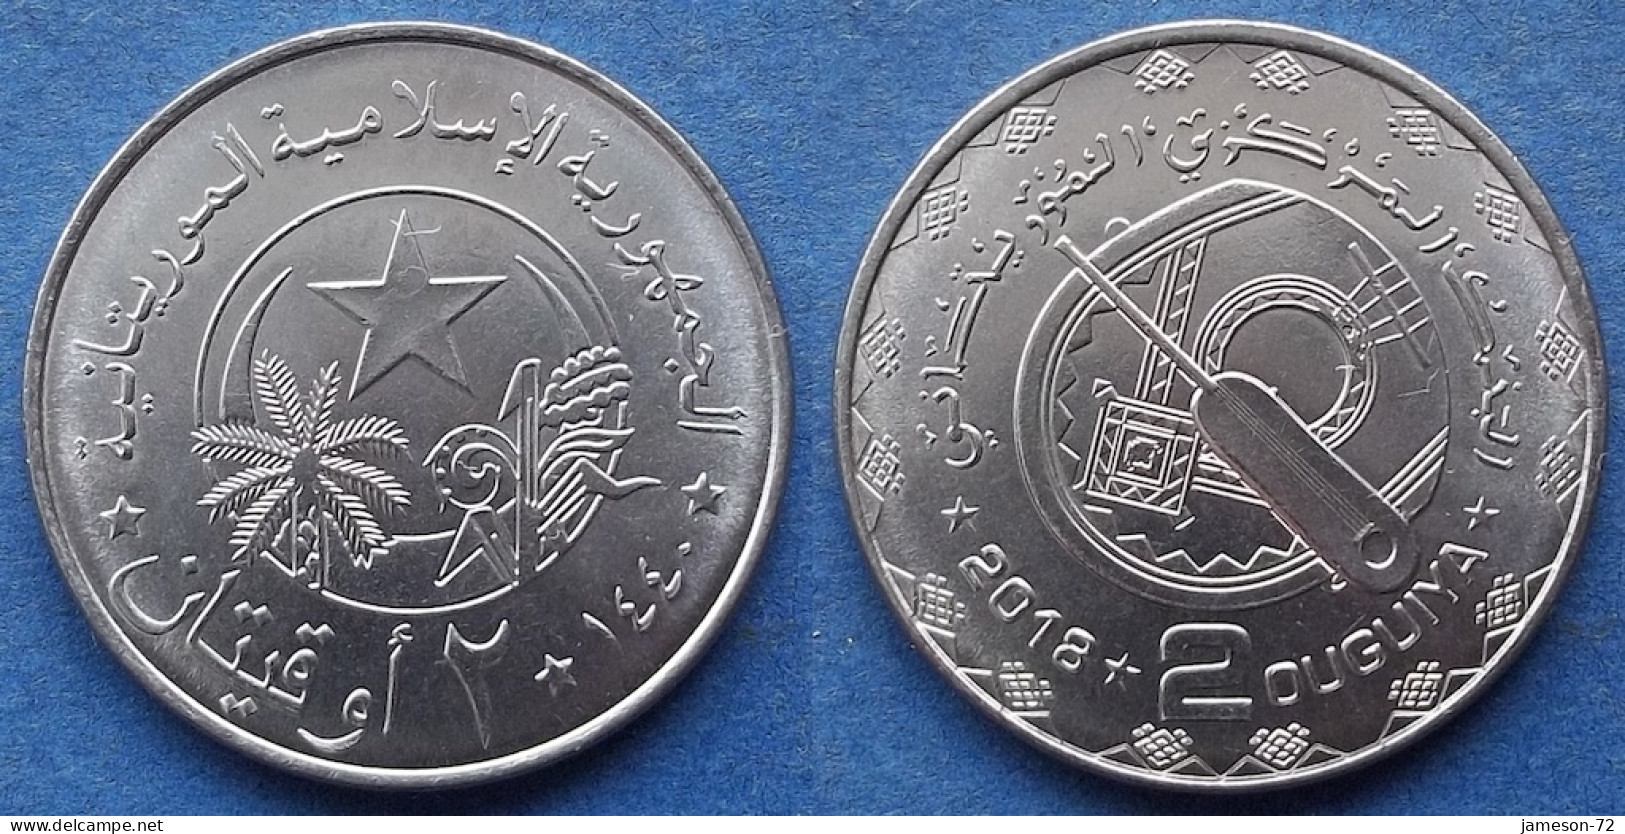 MAURITANIA - 2 Ouguiya AH1440 2018AD "National Instruments" KM# 16 Independent Republic (1960) - Edelweiss Coins - Mauretanien